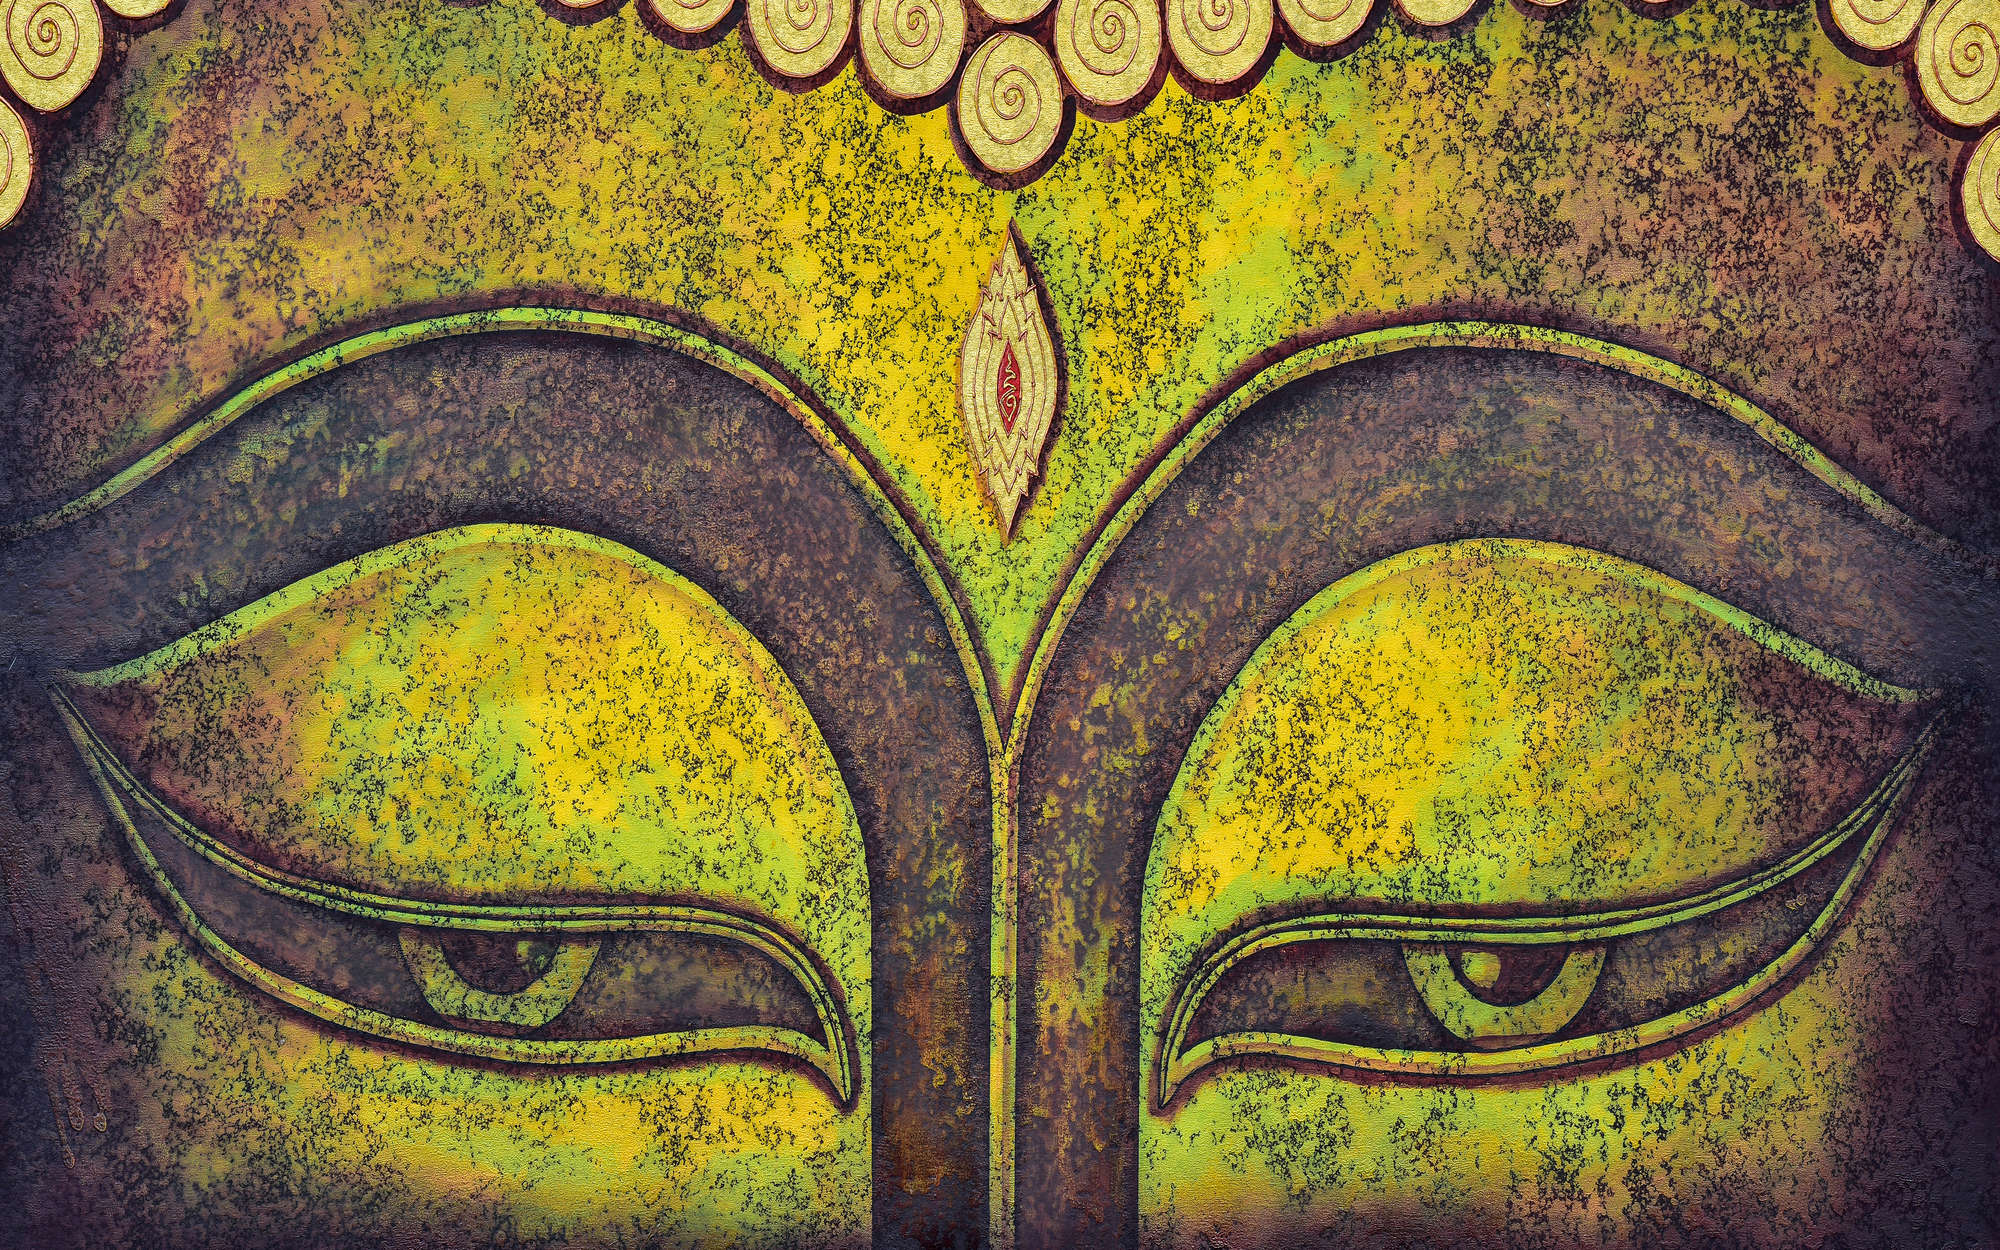             Photo wallpaper detail of Buddha face - Matt smooth non-woven
        